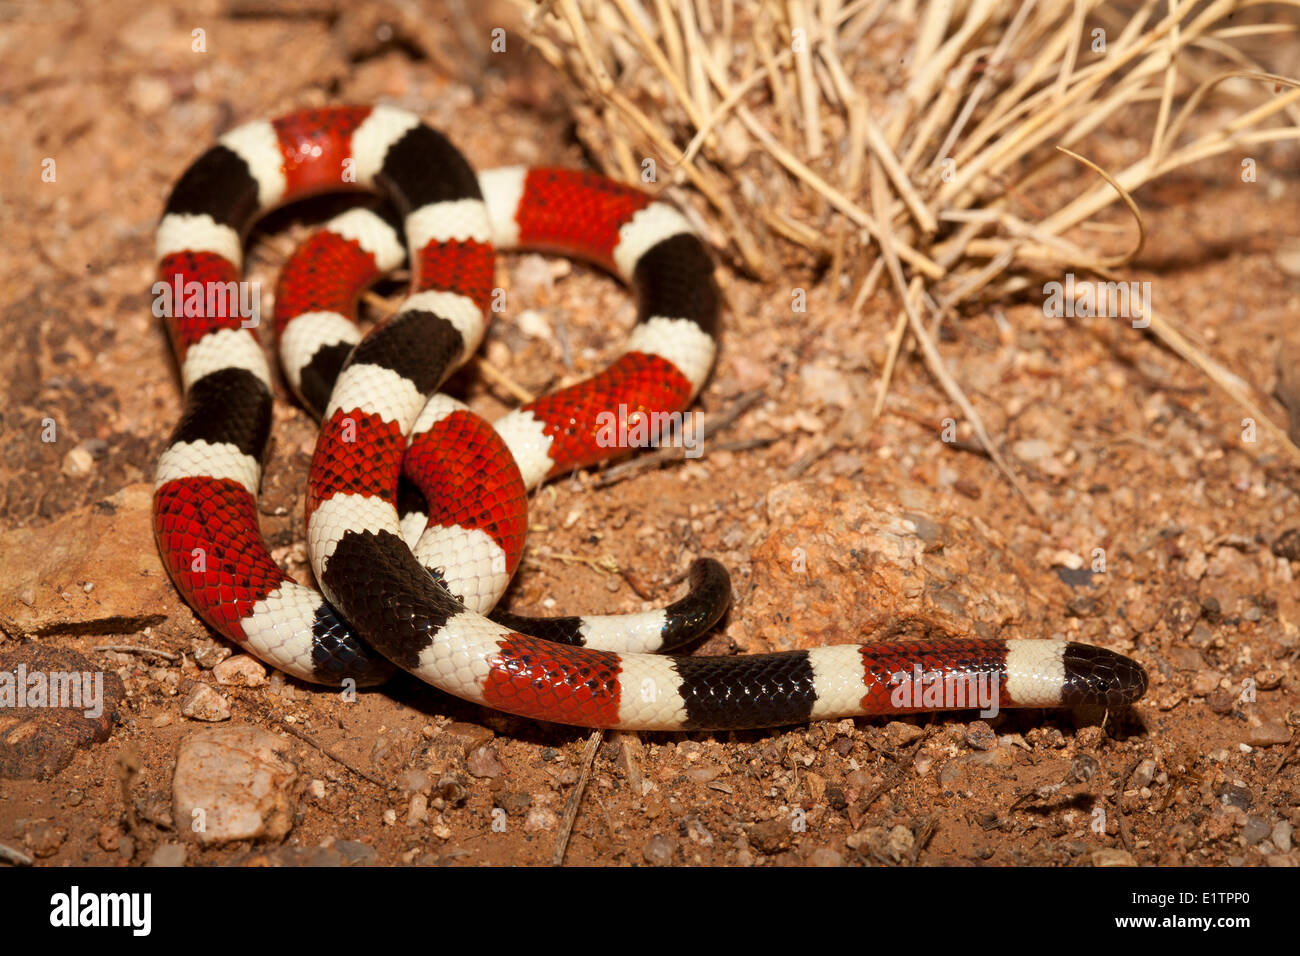 Coral Snake, Micrurus fulvius, Arizona, Stati Uniti d'America Foto Stock